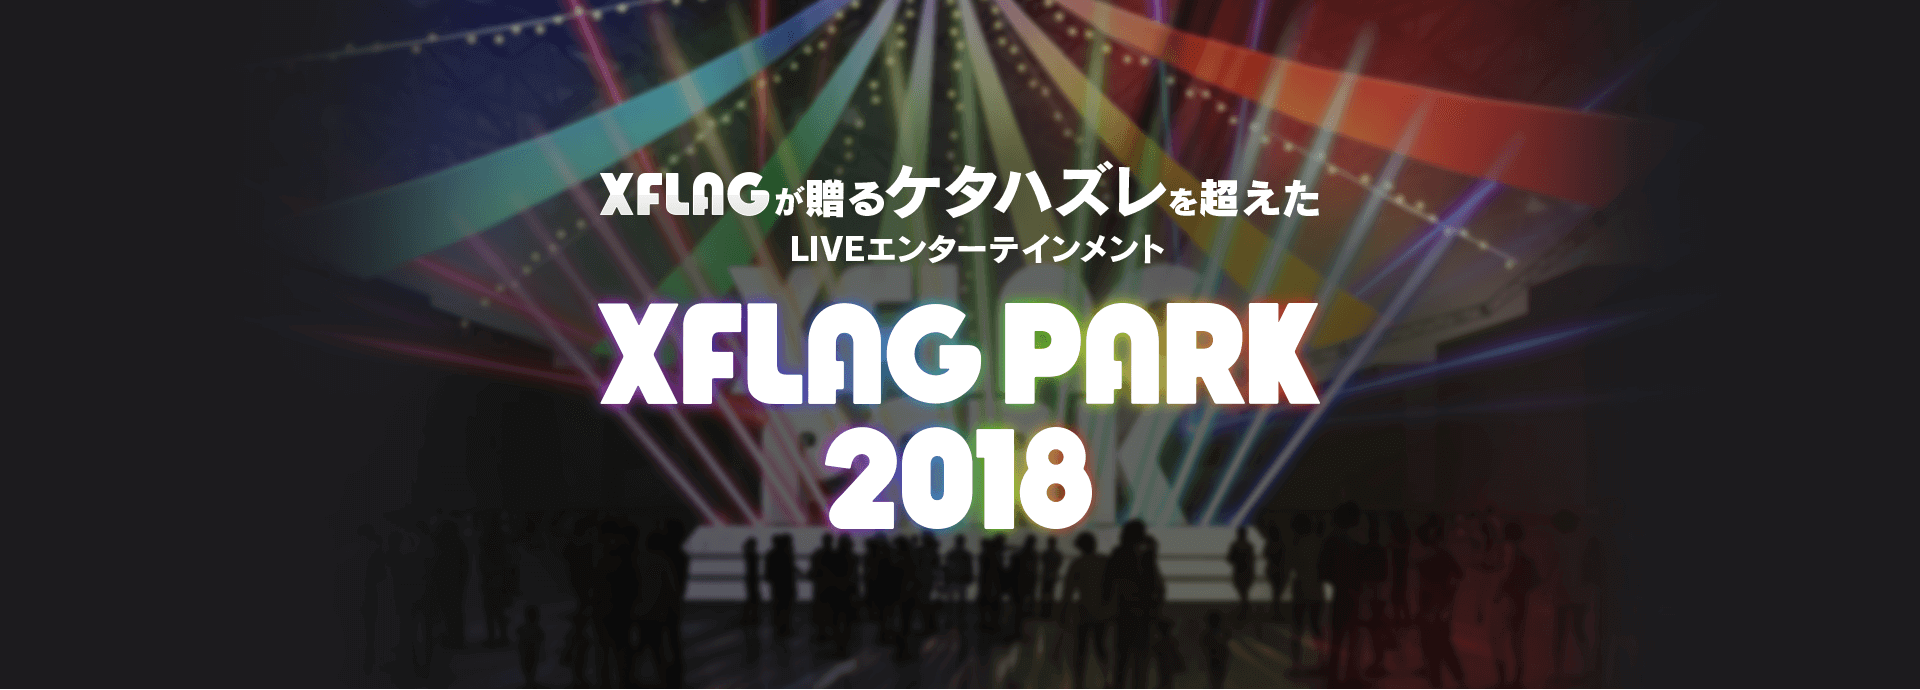 XFLAG が贈るケタハズレを超えた LIVEエンターテインメント XFLAG PARK2018